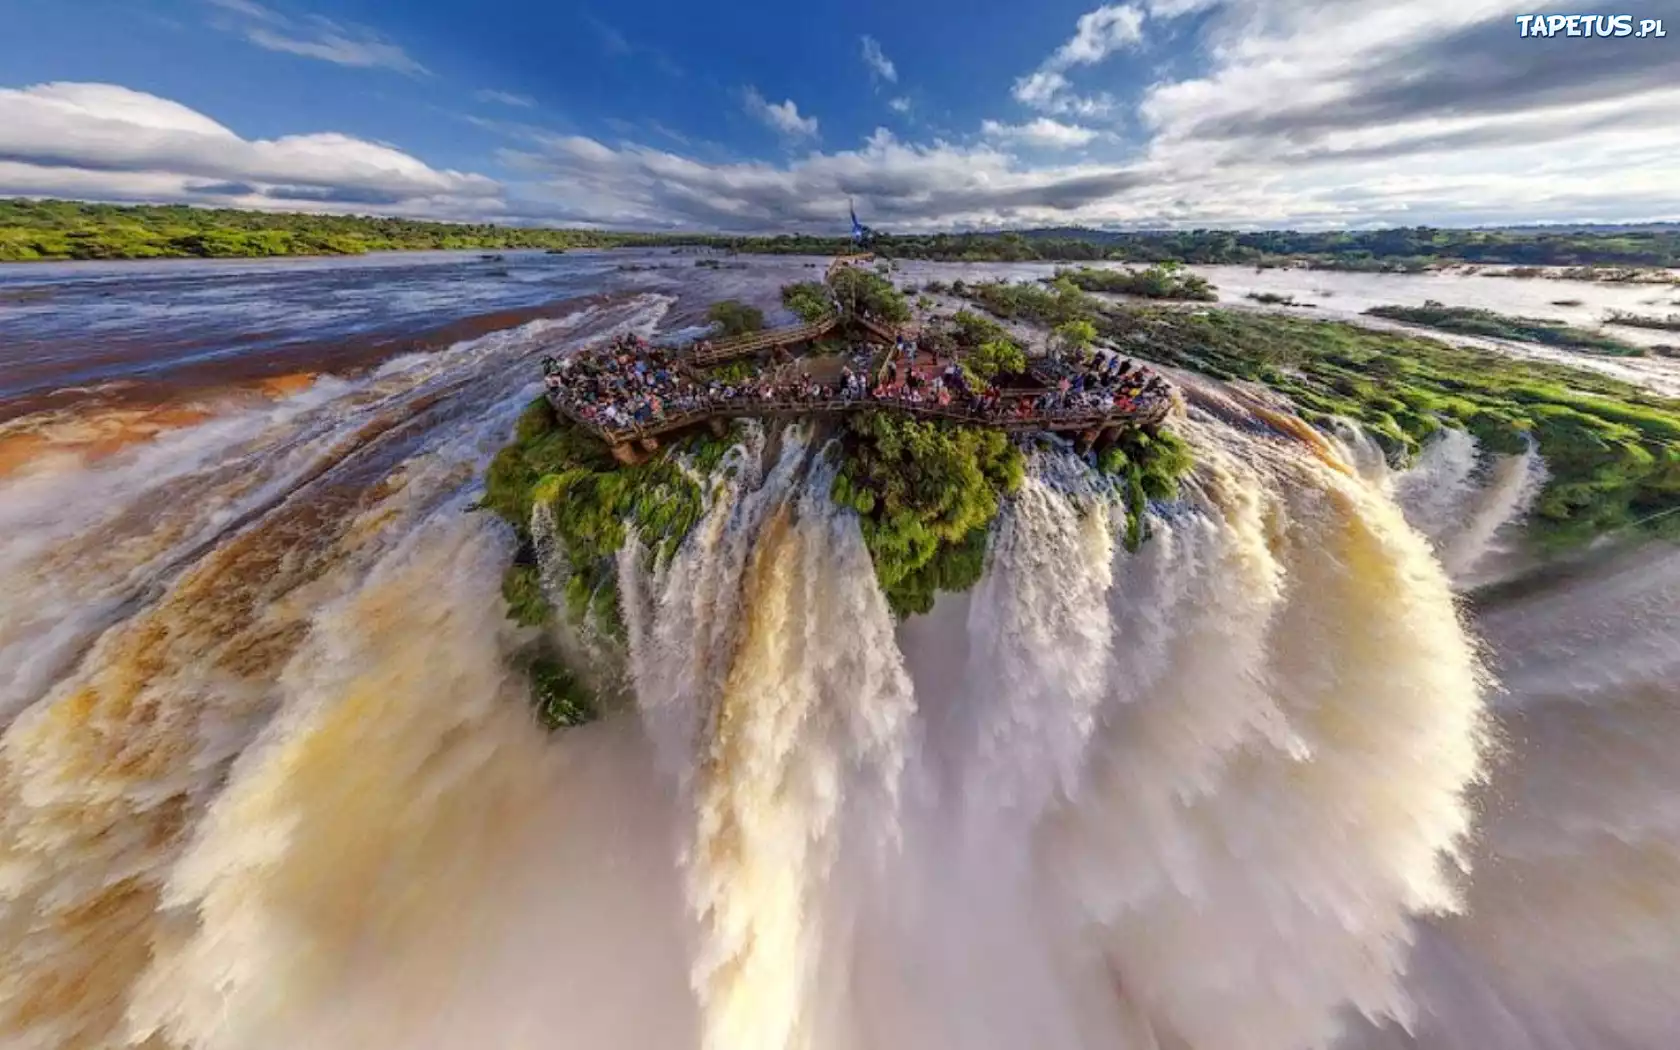 Комар водопад. Водопады Игуасу Аргентина. Глотка дьявола водопад Игуасу. Долина Агус Кентес Бразилия. Водопад глотка дьявола в Бразилии.